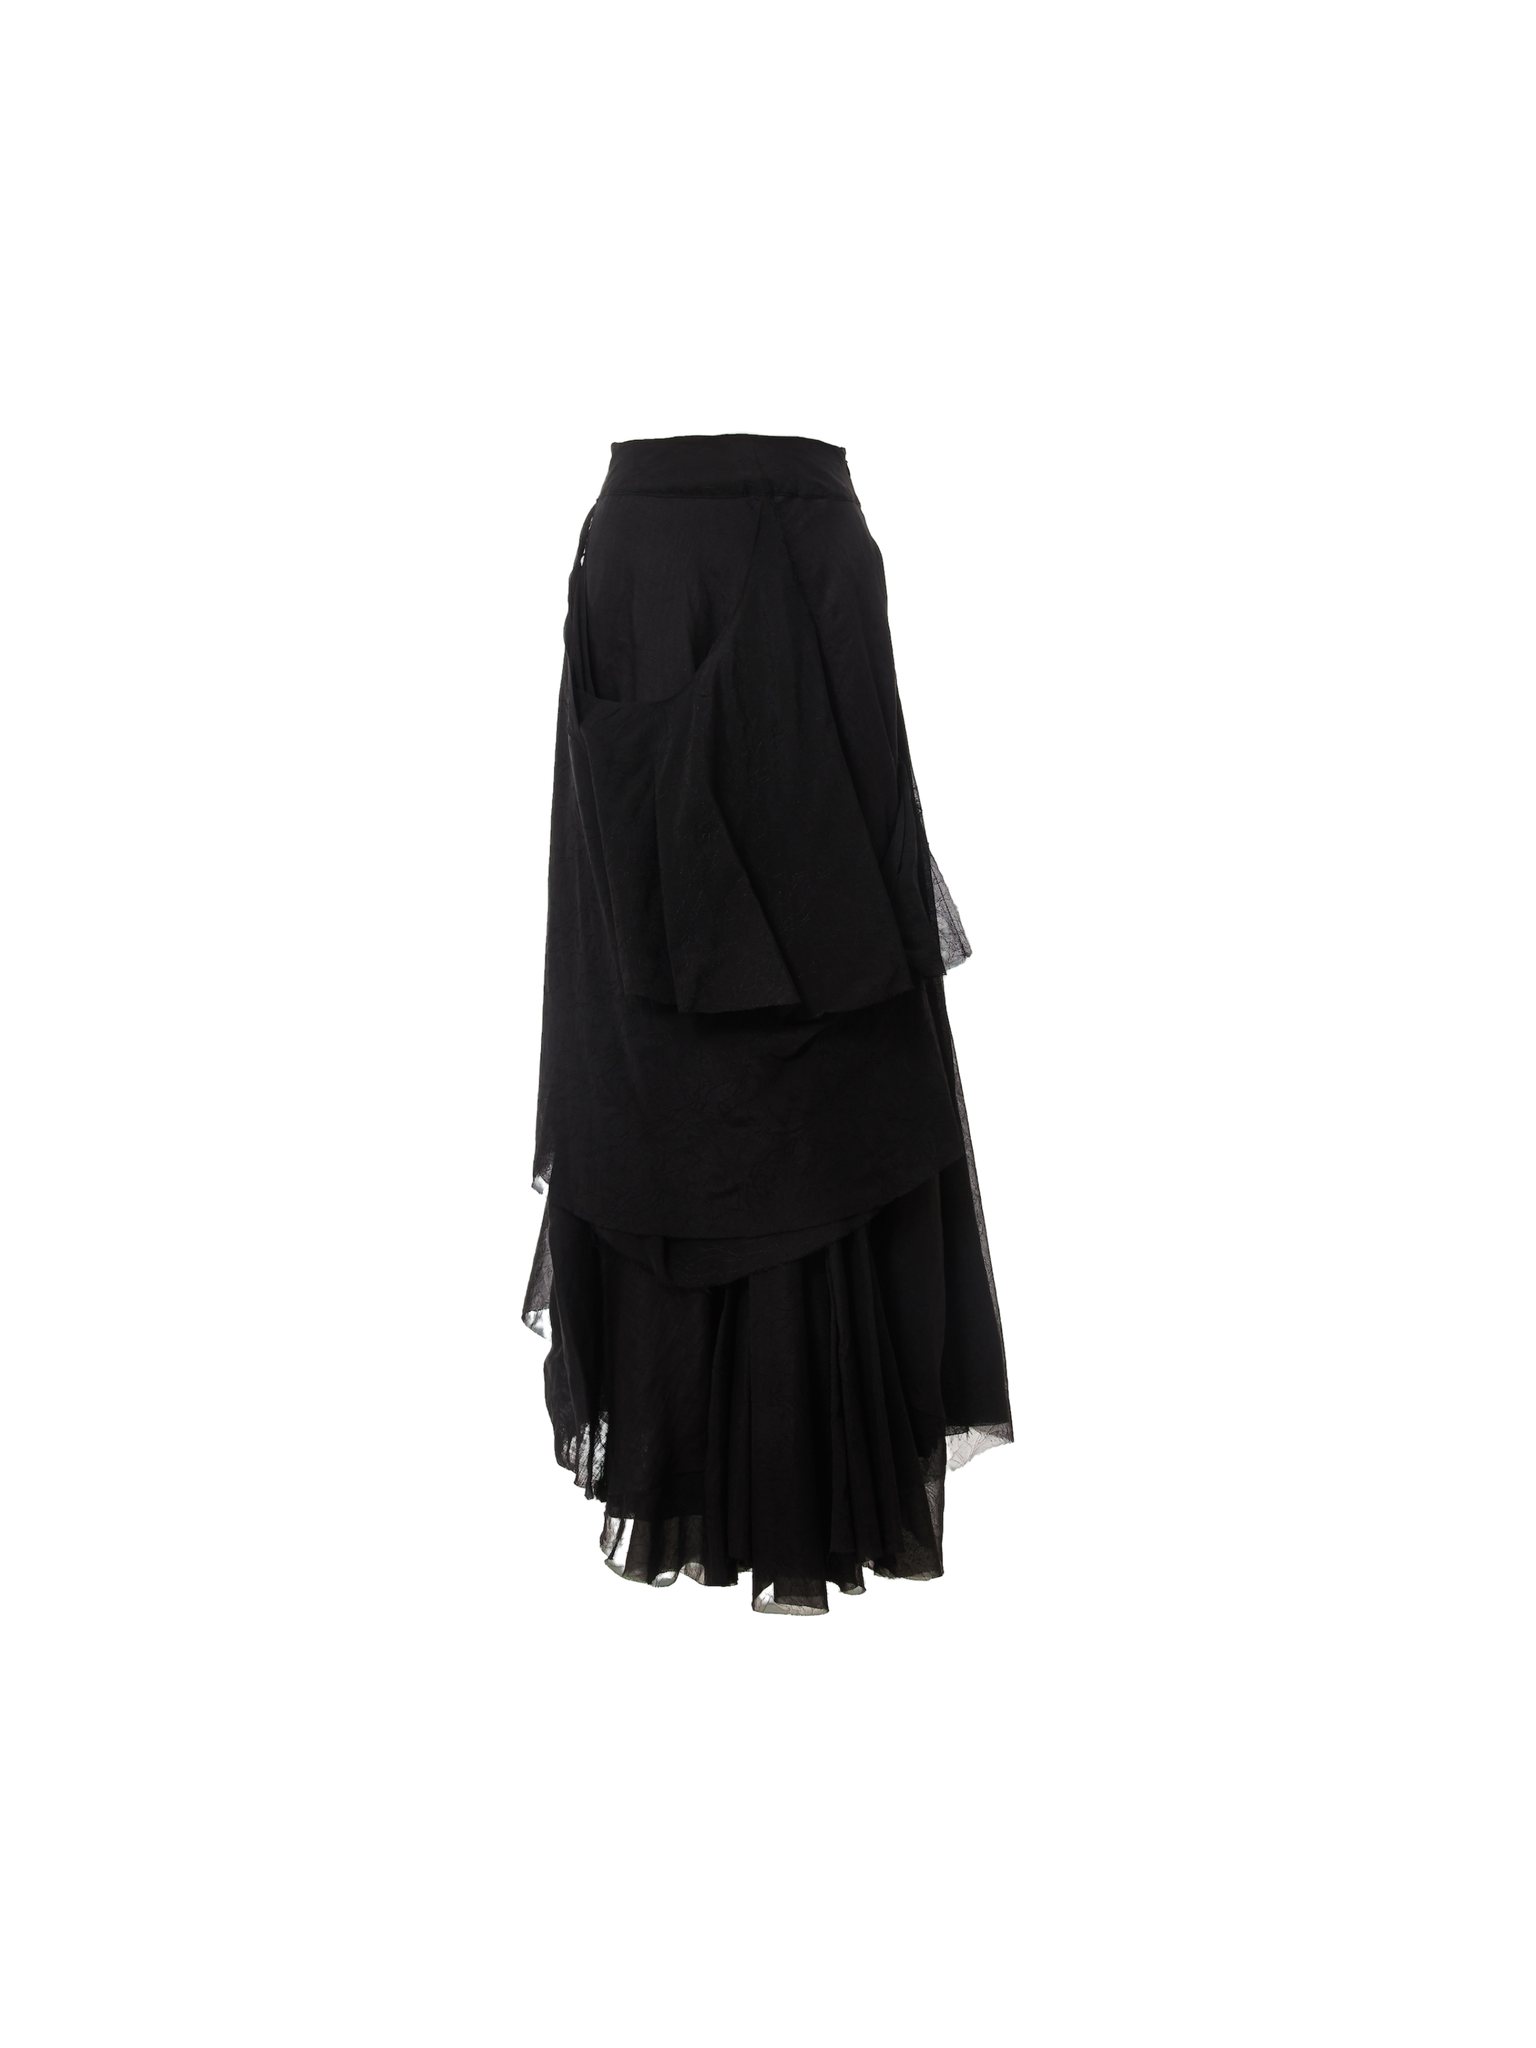 Black Lace Skirt